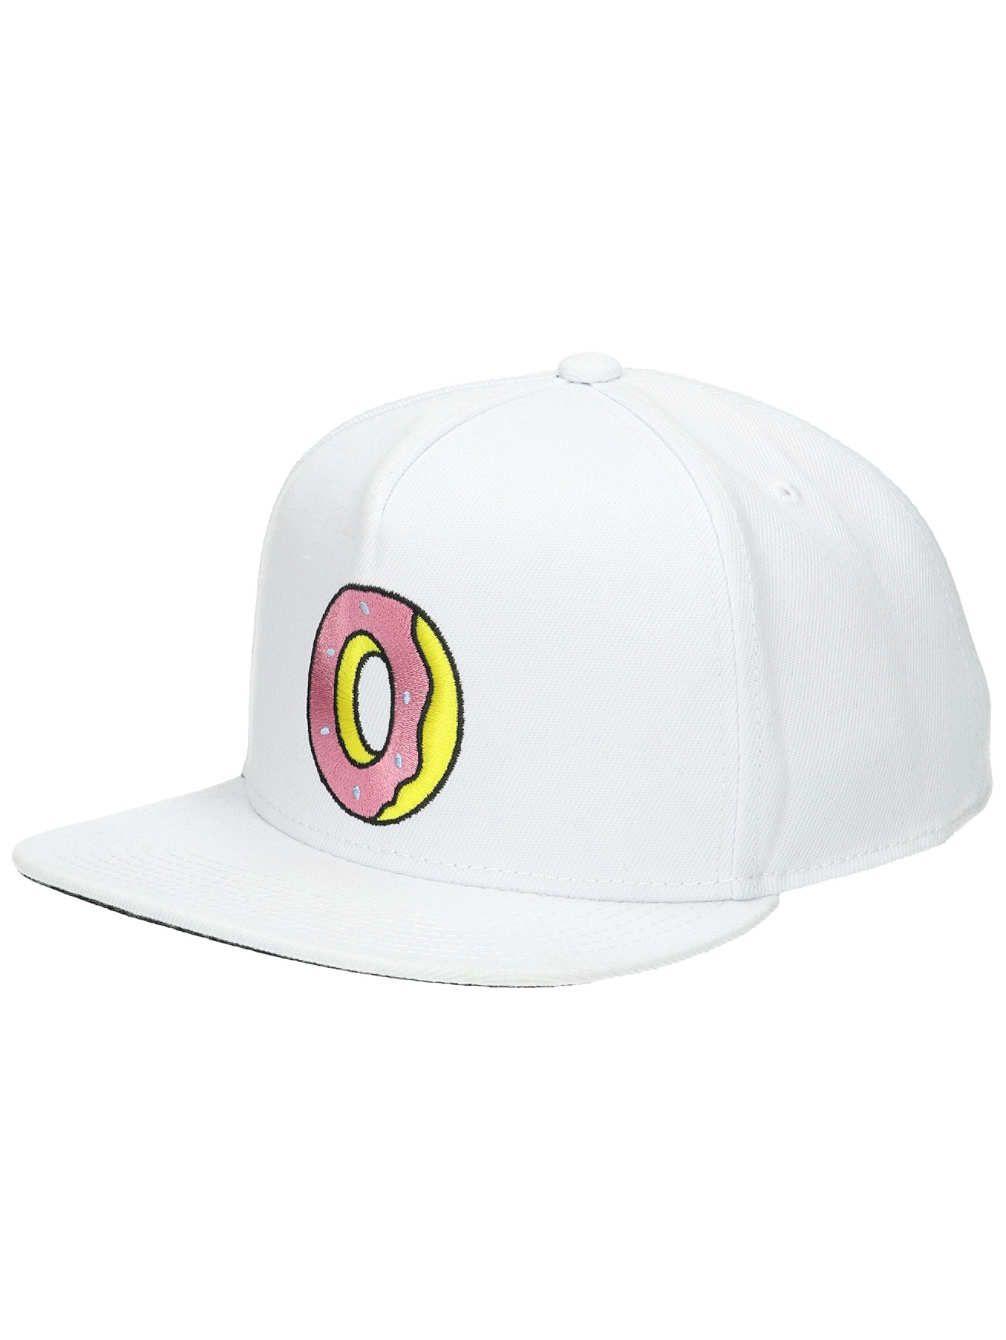 Odd Future Single Donut Logo - Buy Odd Future Single Donut Snapback Cap Online At Blue Tomato.com